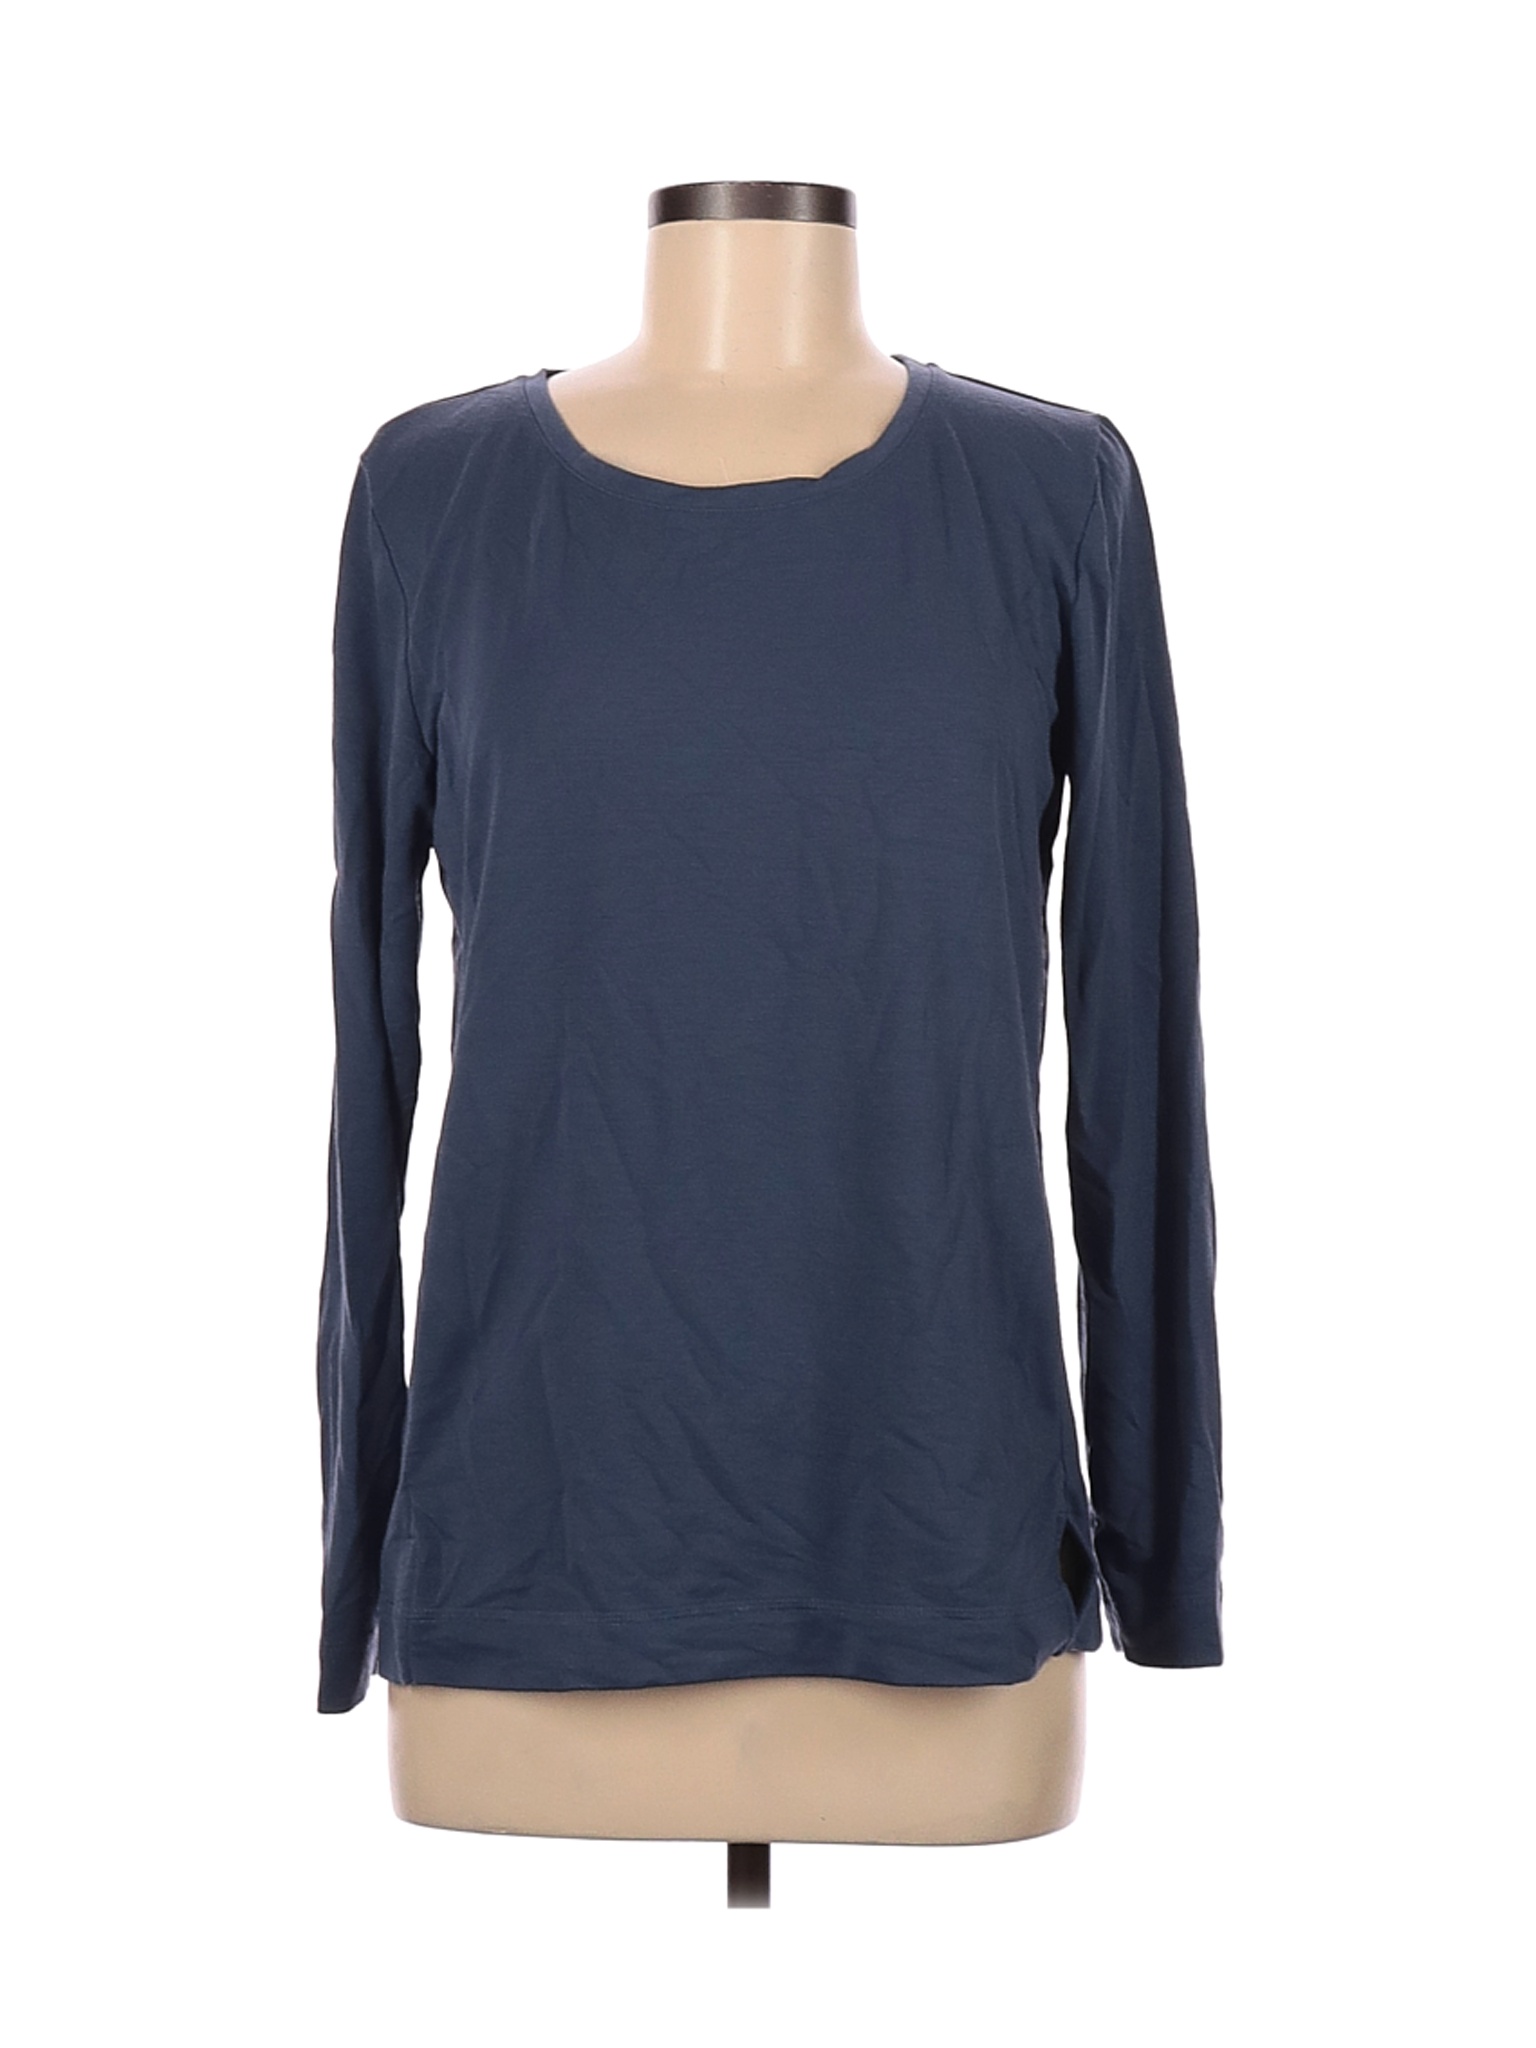 Hue Women Blue Long Sleeve T-Shirt S | eBay